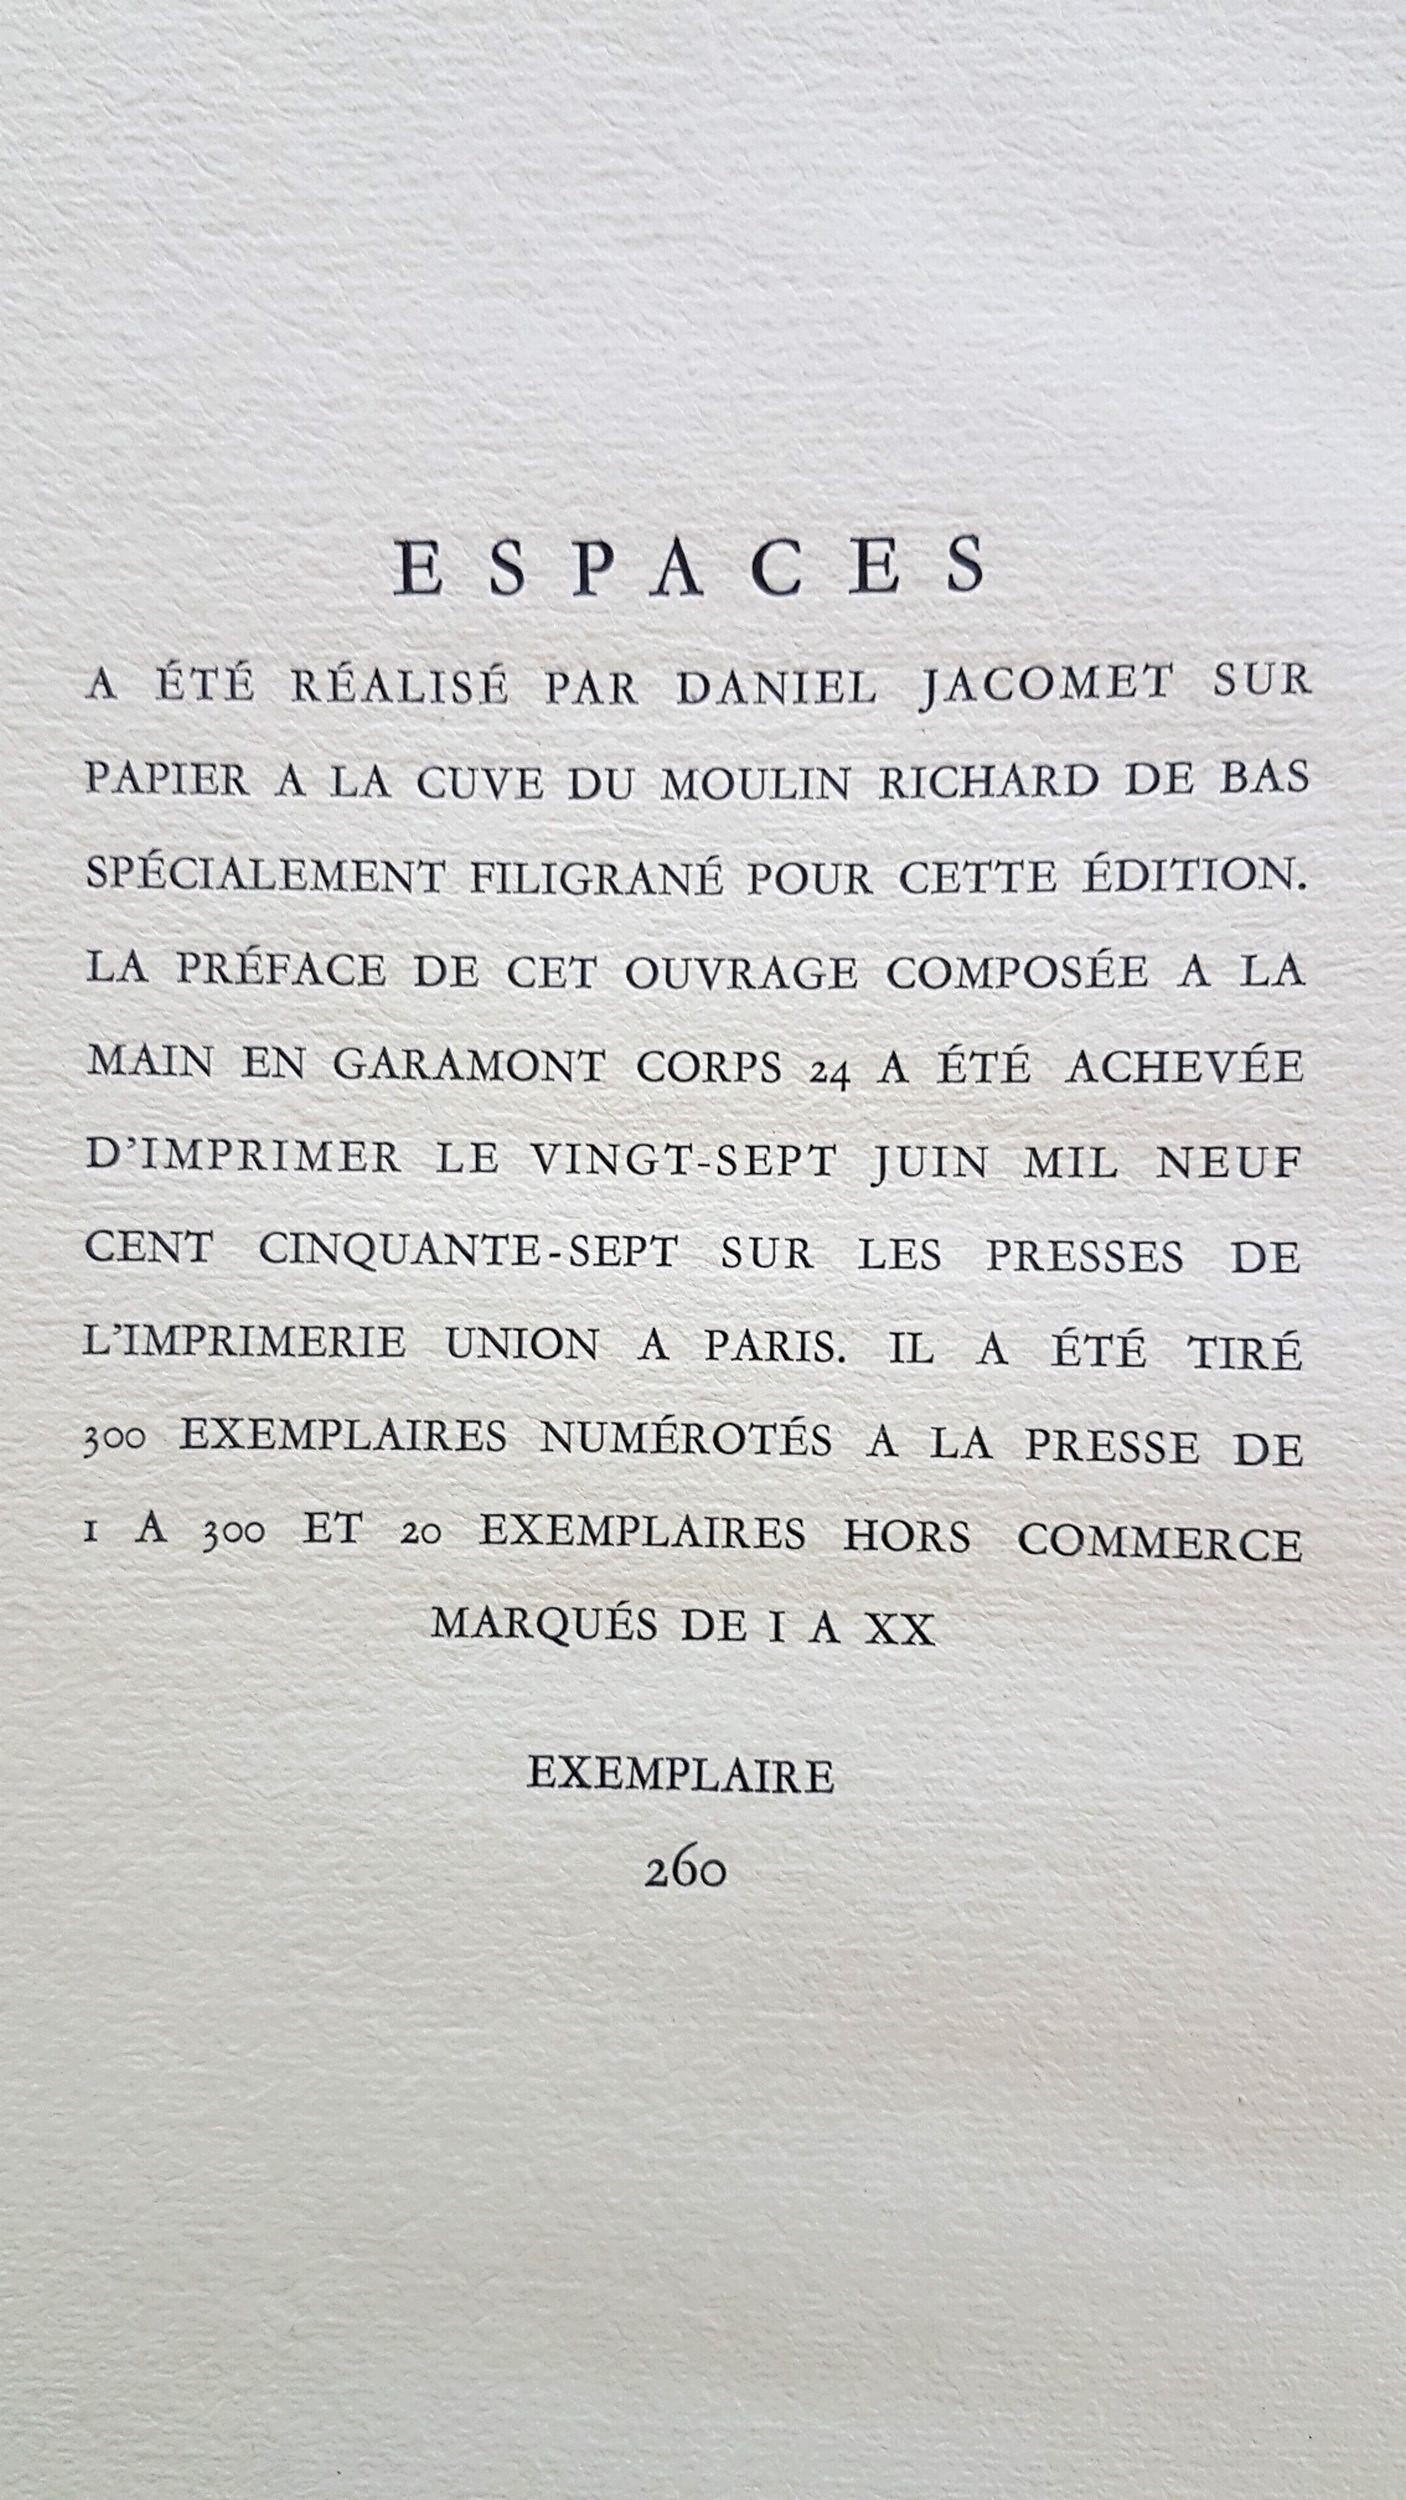 Le Char Grec from the Espace Portfolio - Beige Figurative Print by George Braque